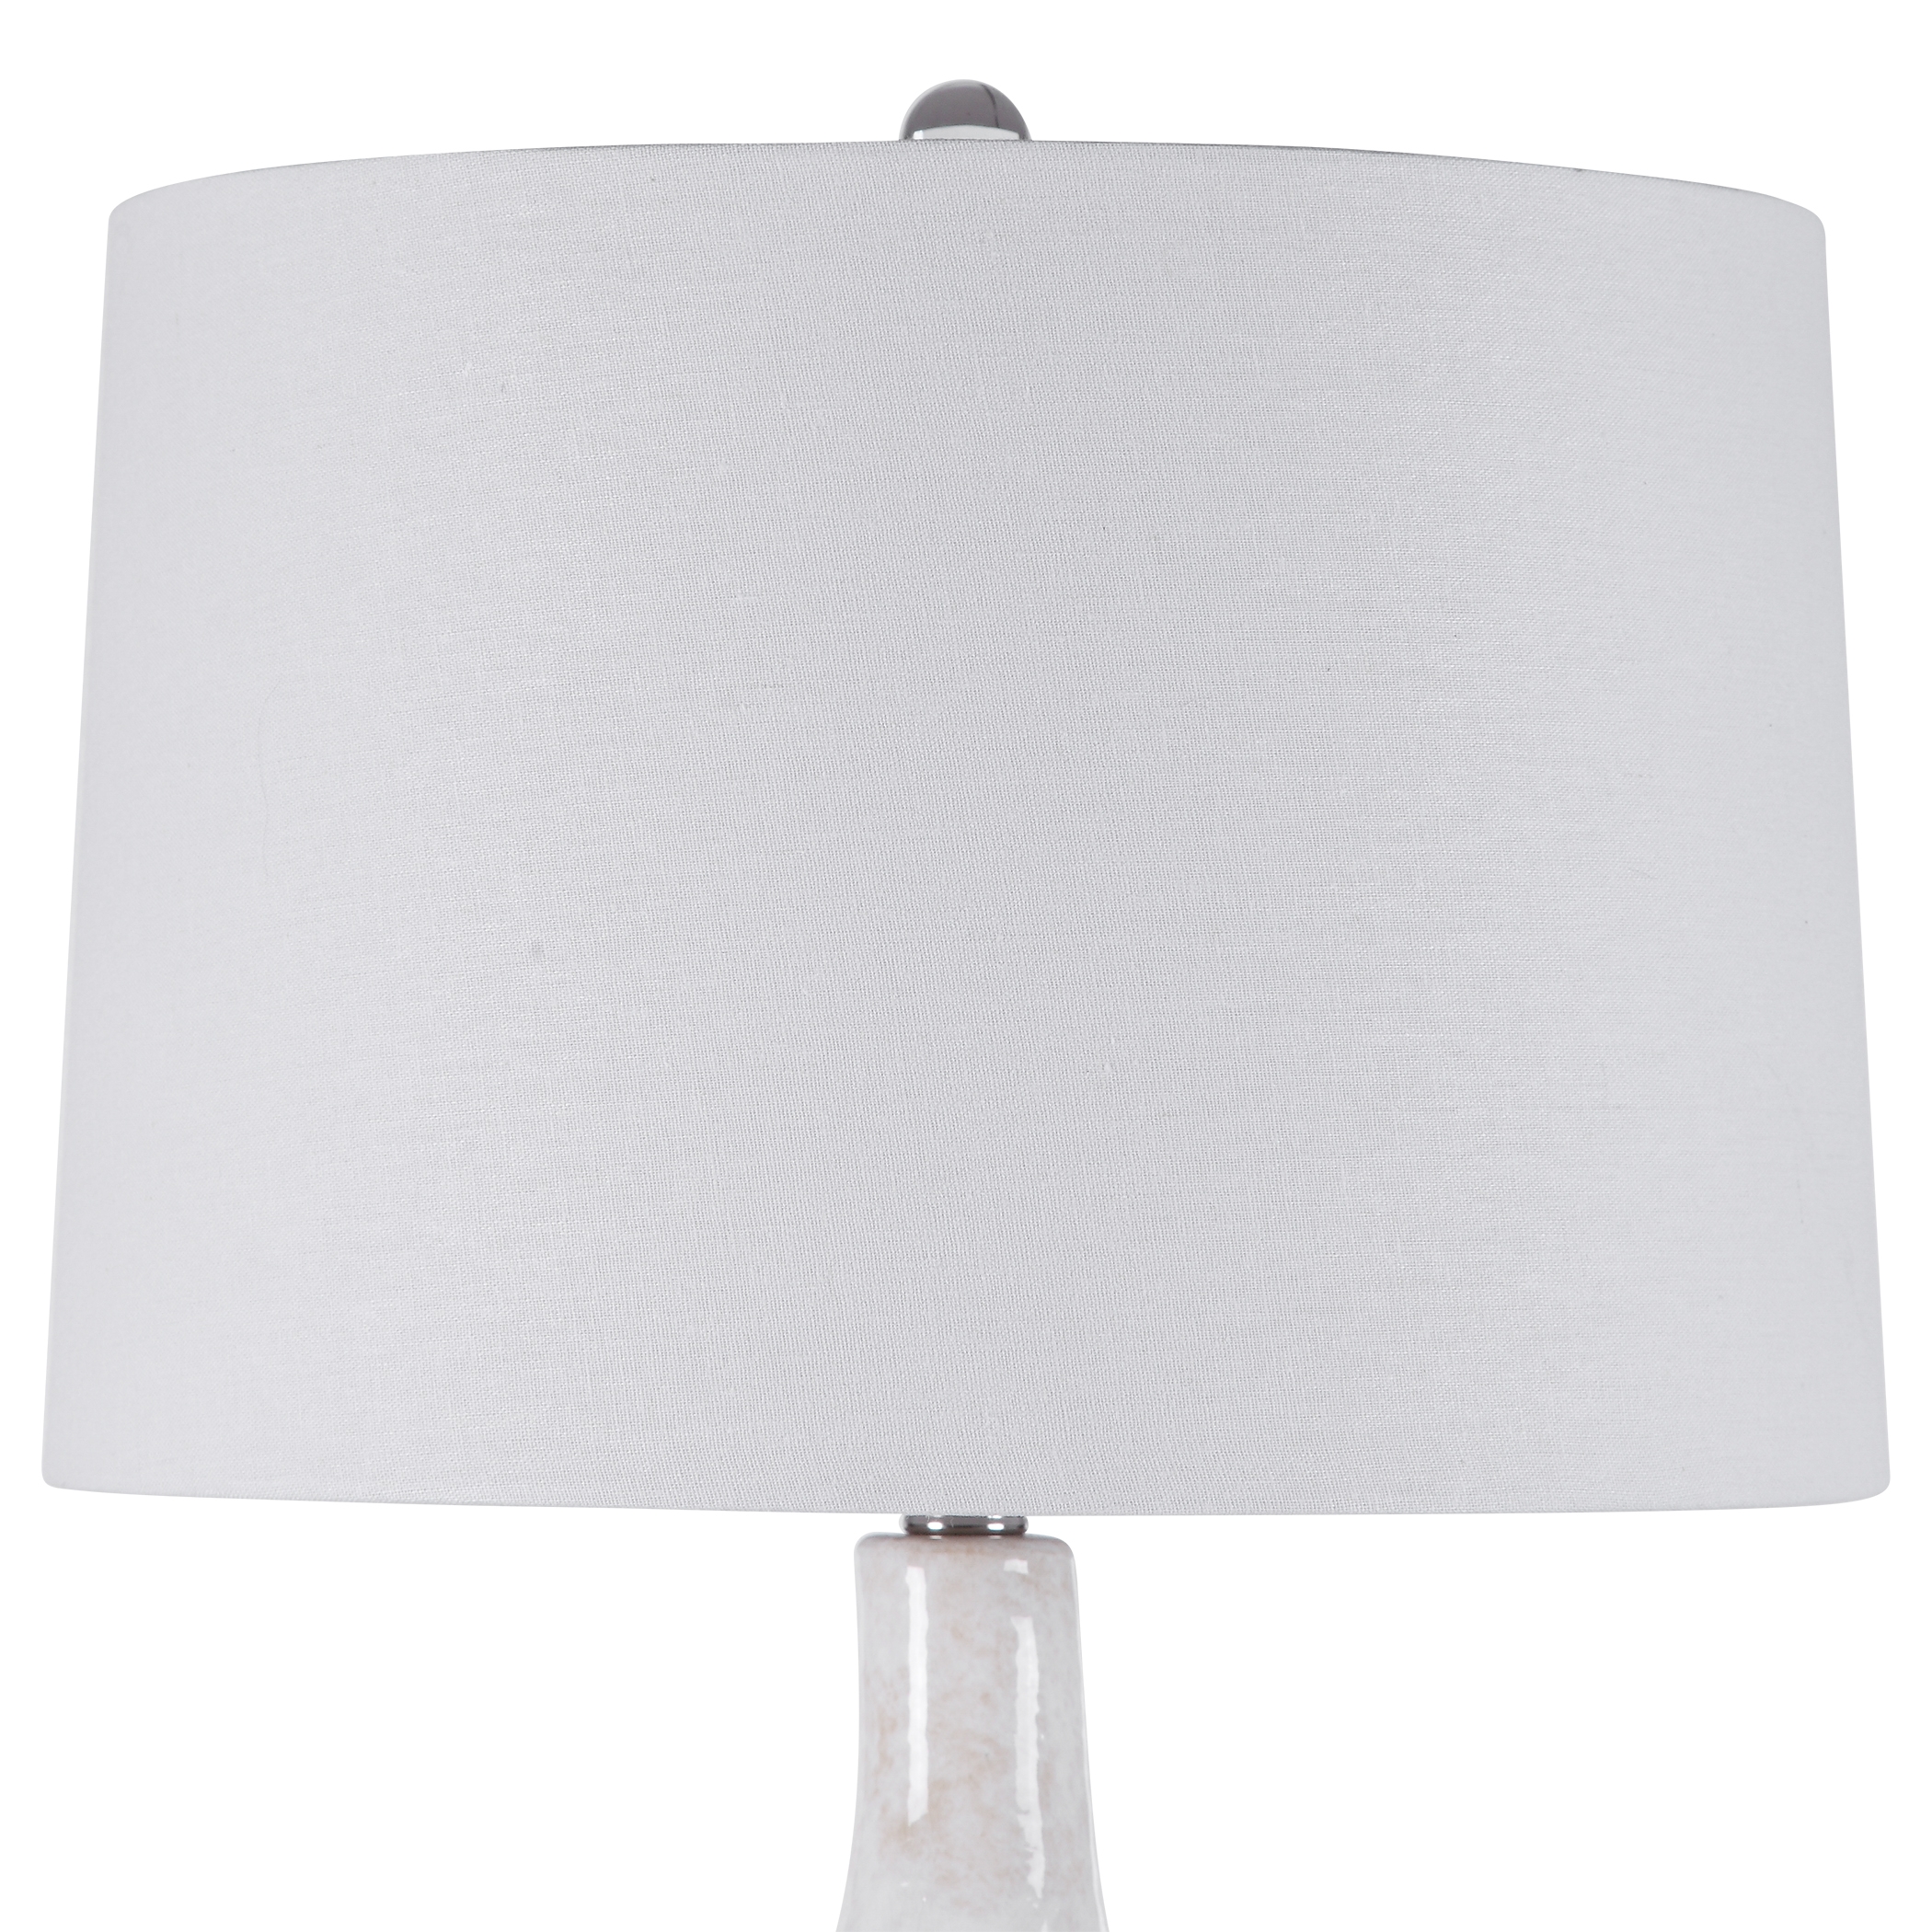 Durango Rust White Table Lamp - Image 5